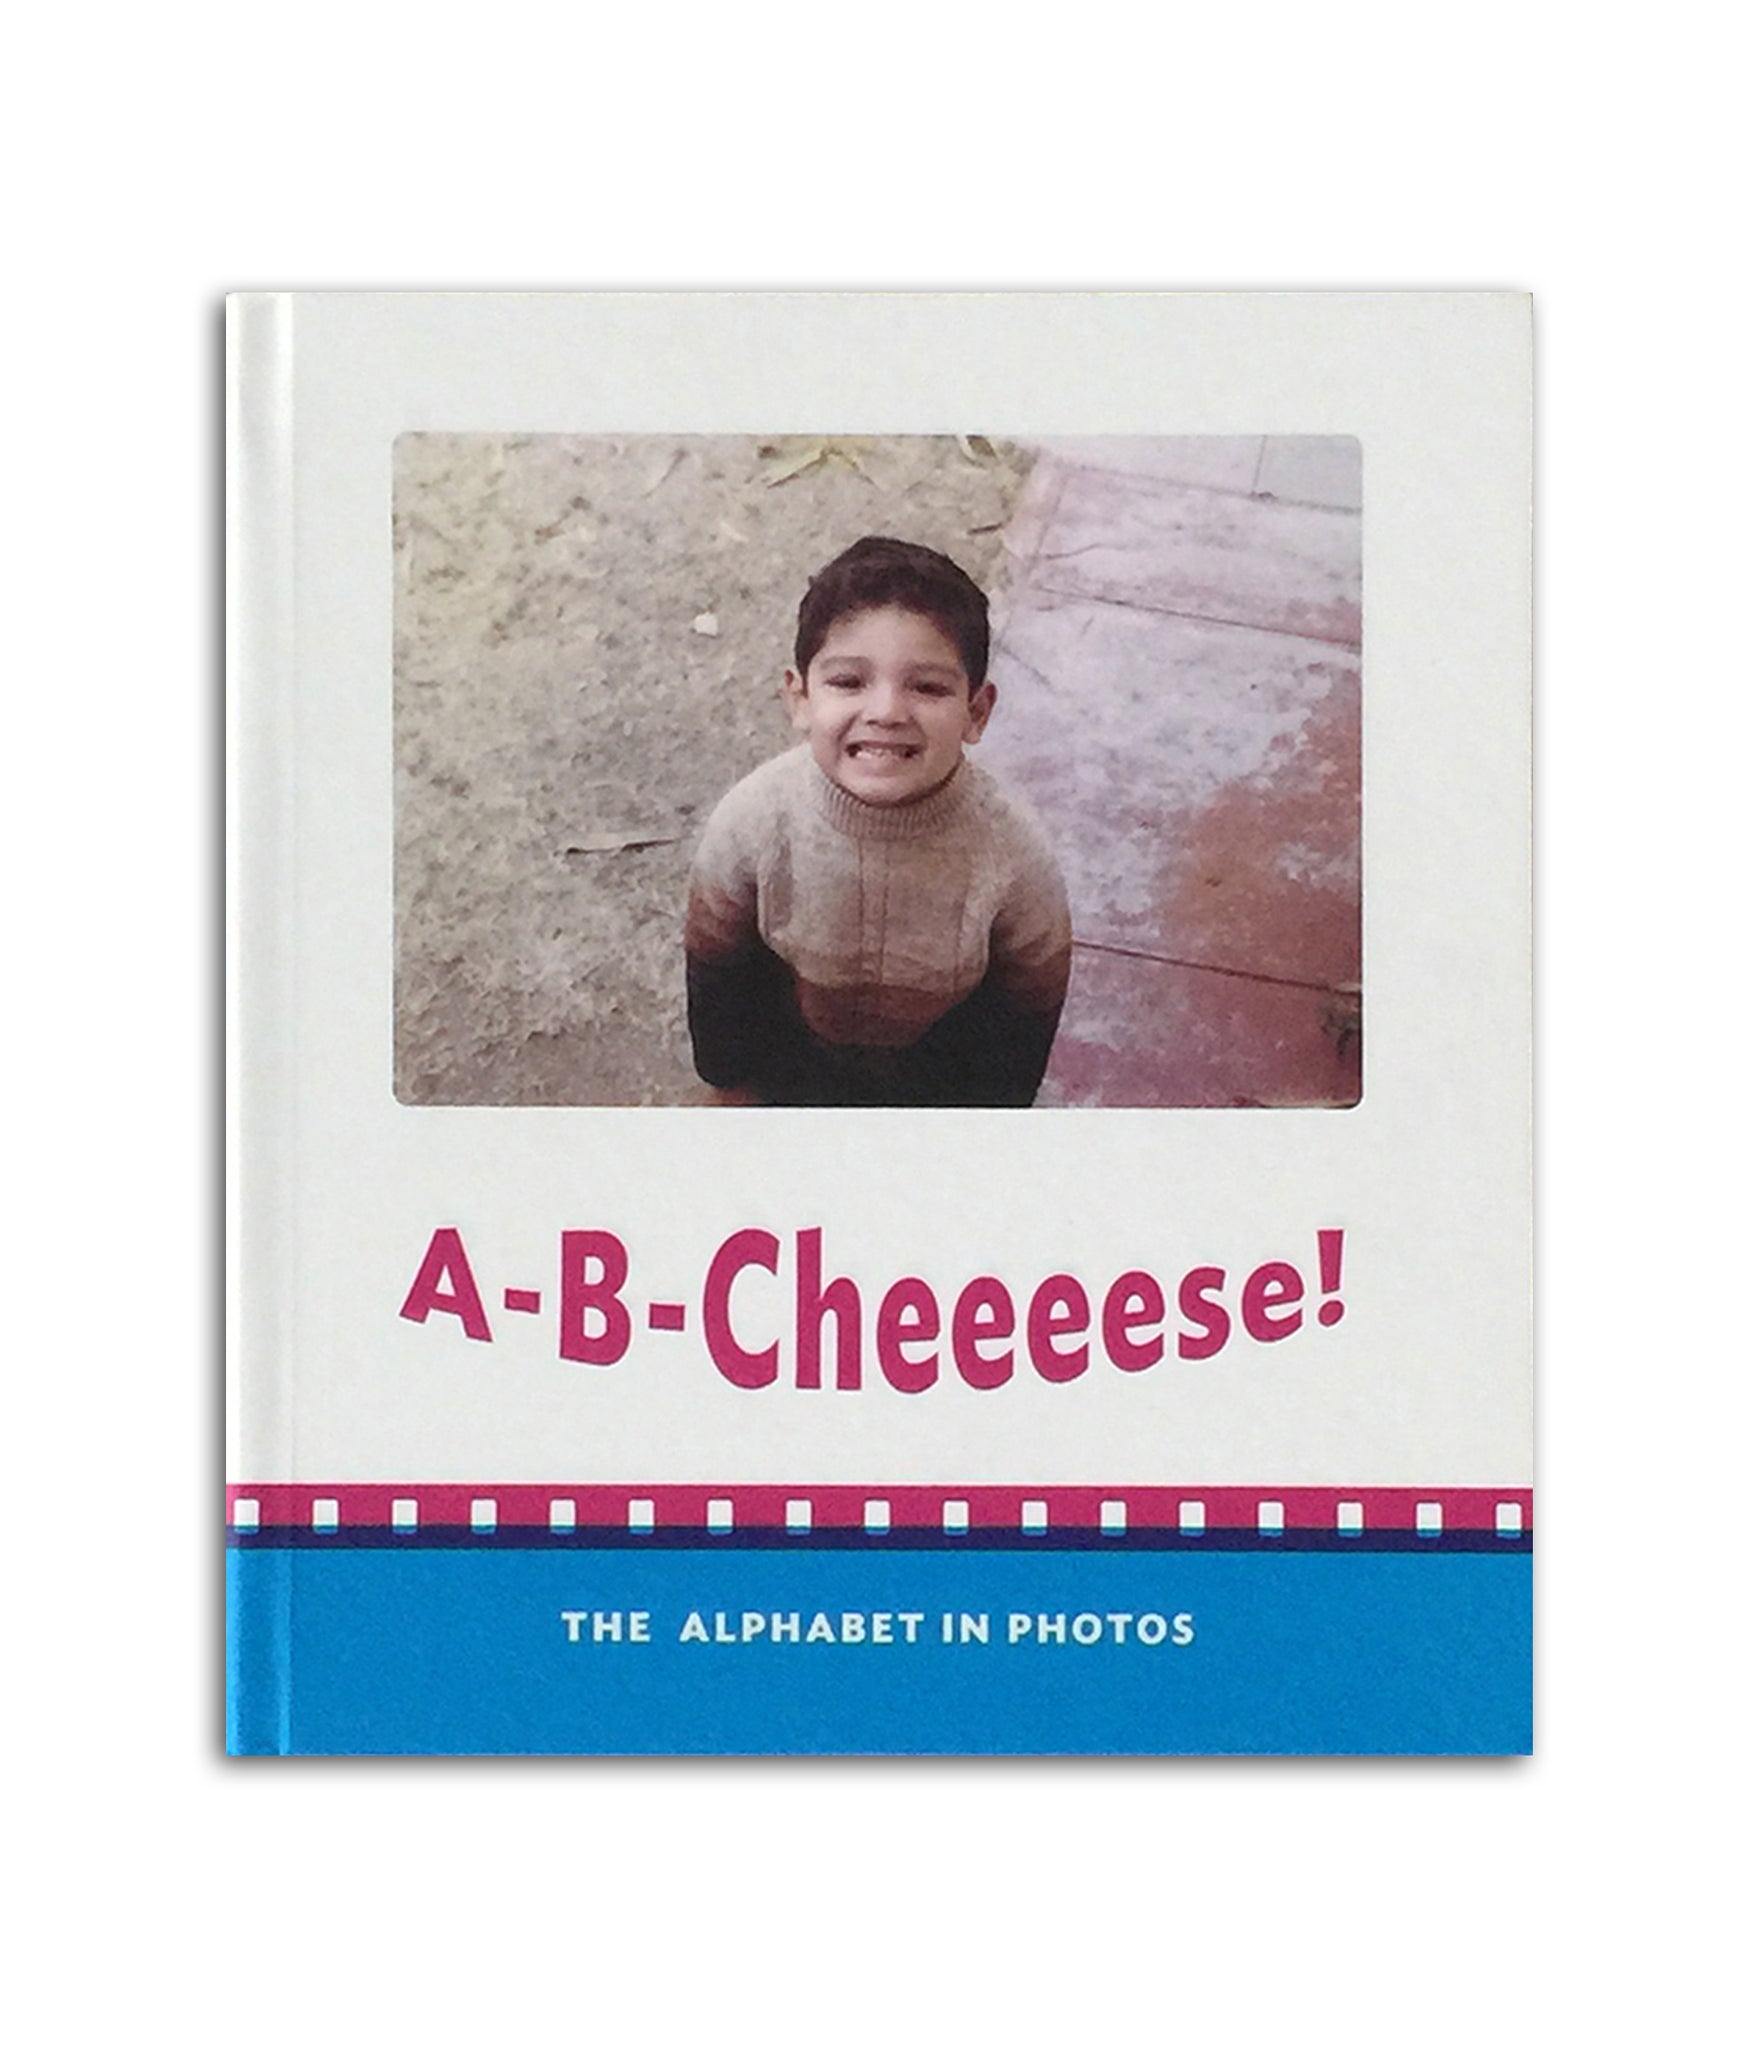 A-B-Cheeeese!